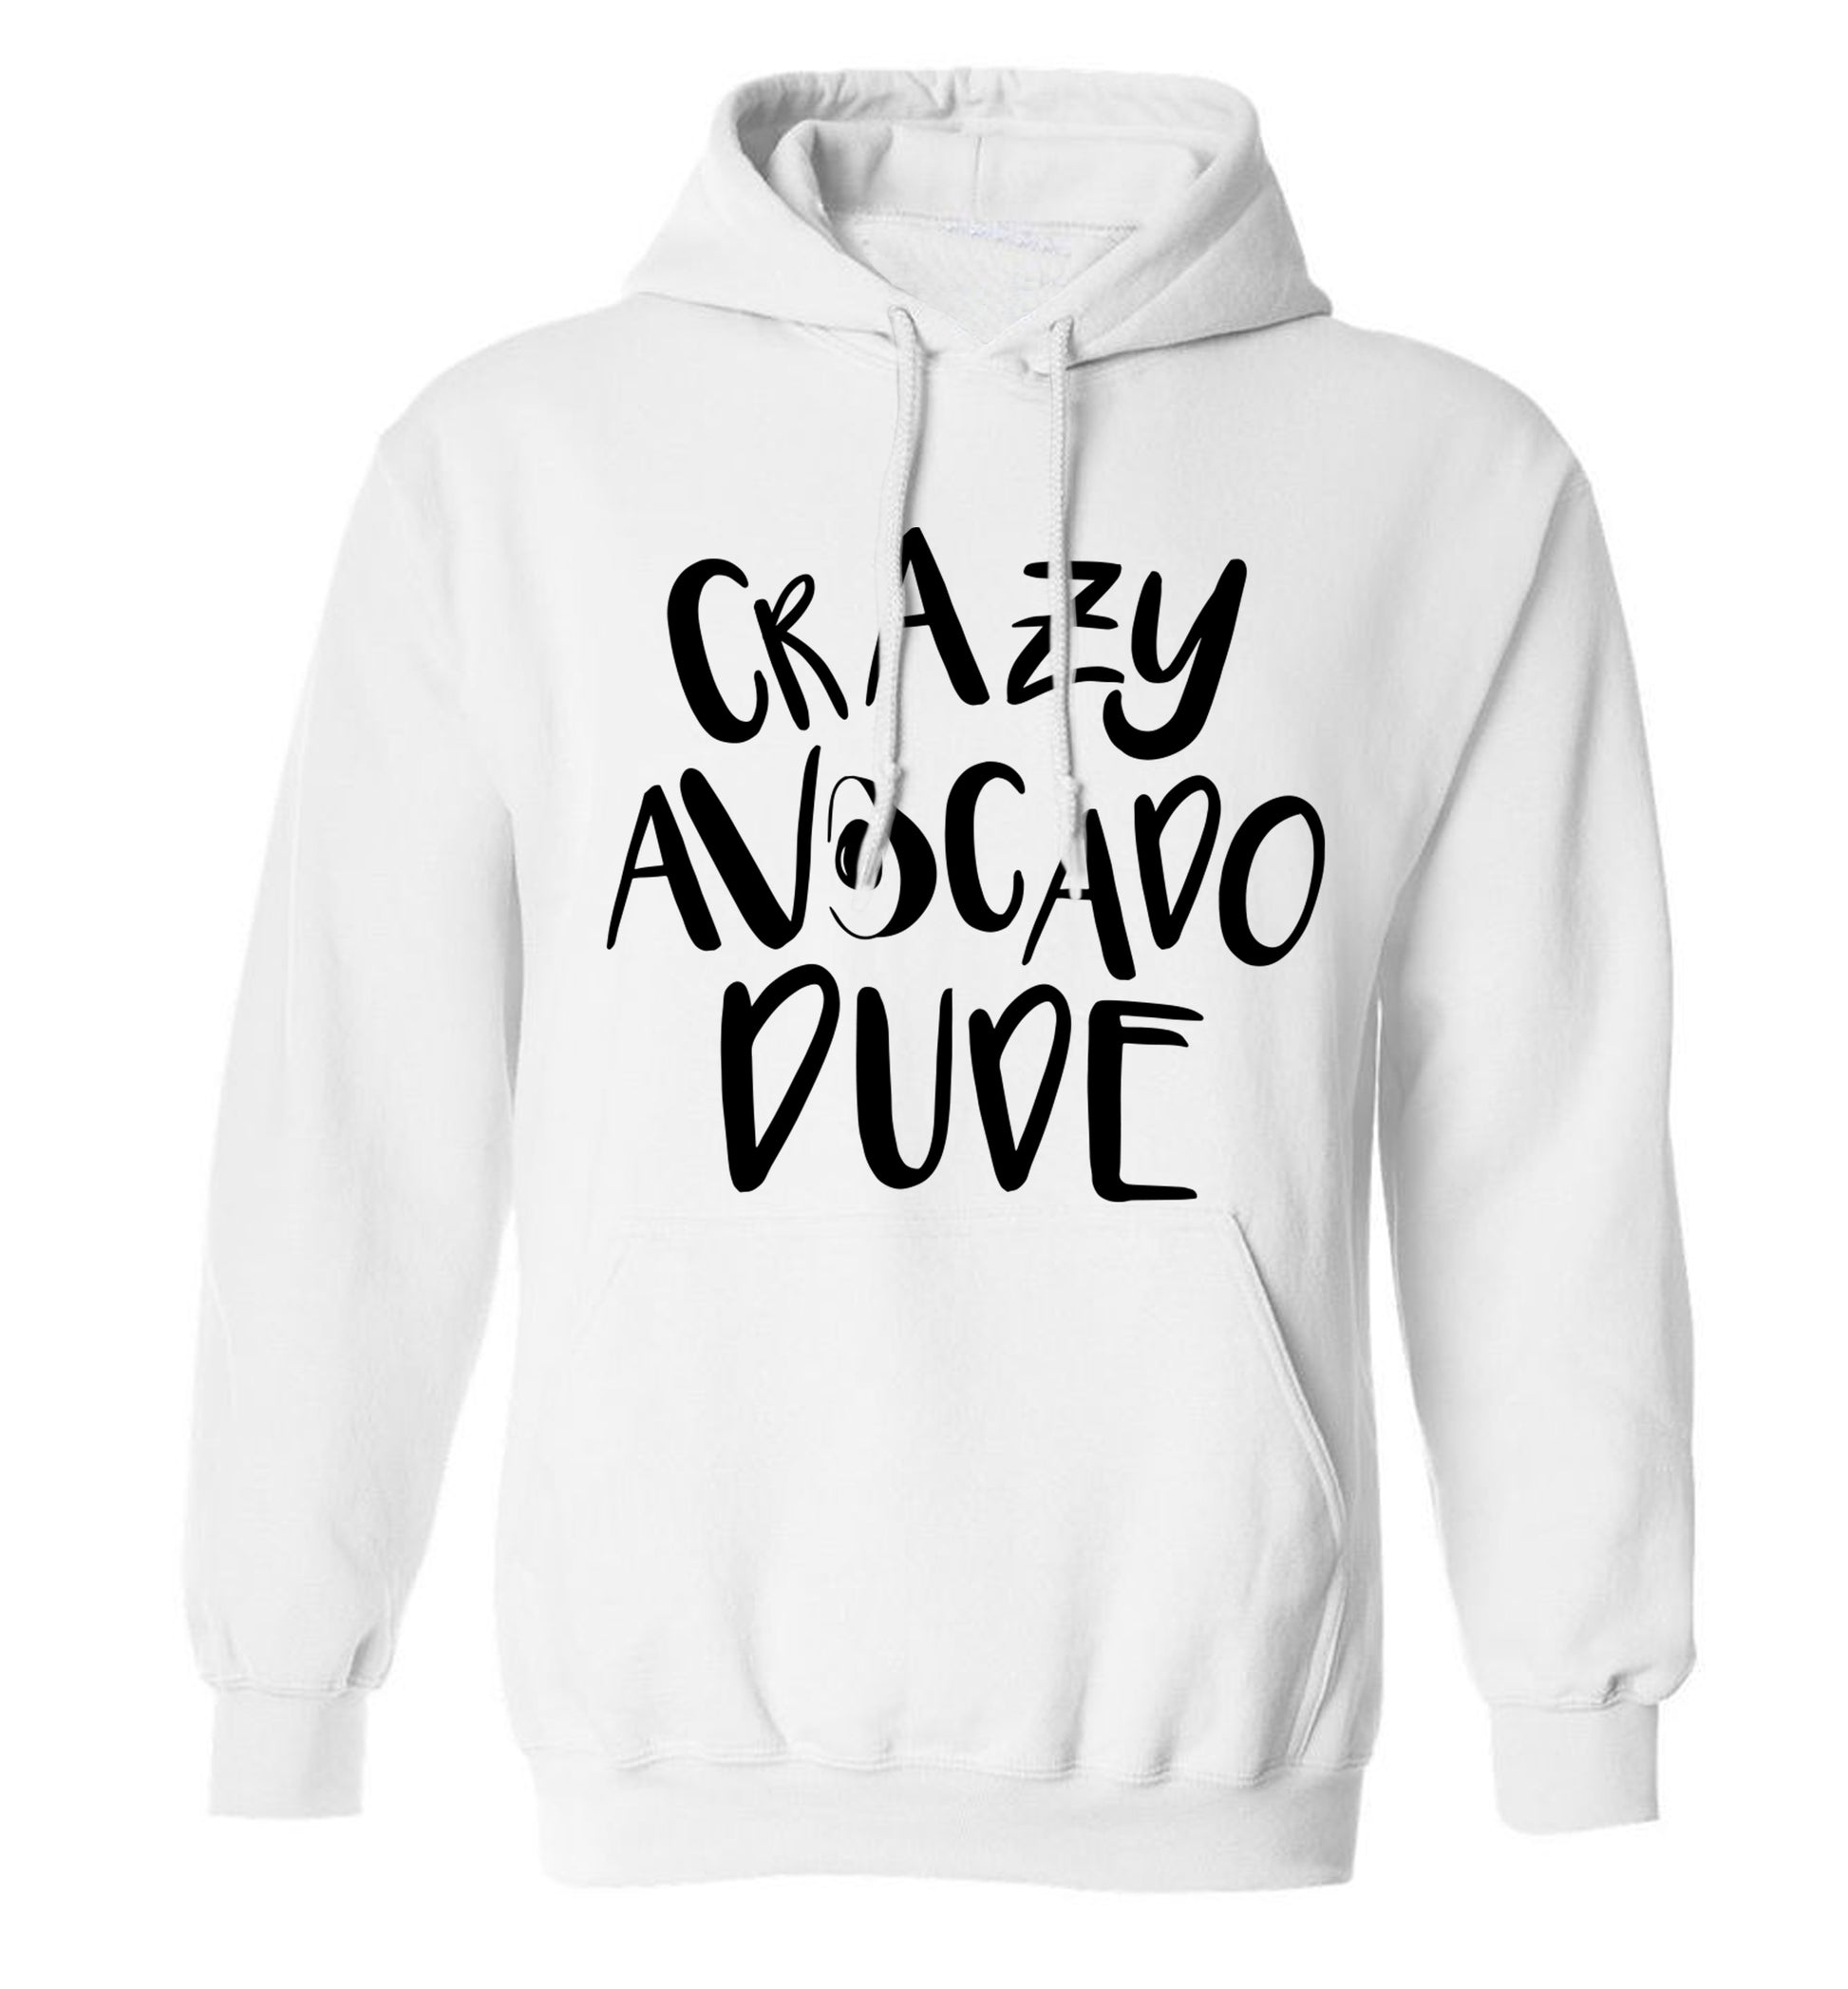 Crazy avocado dude adults unisex white hoodie 2XL